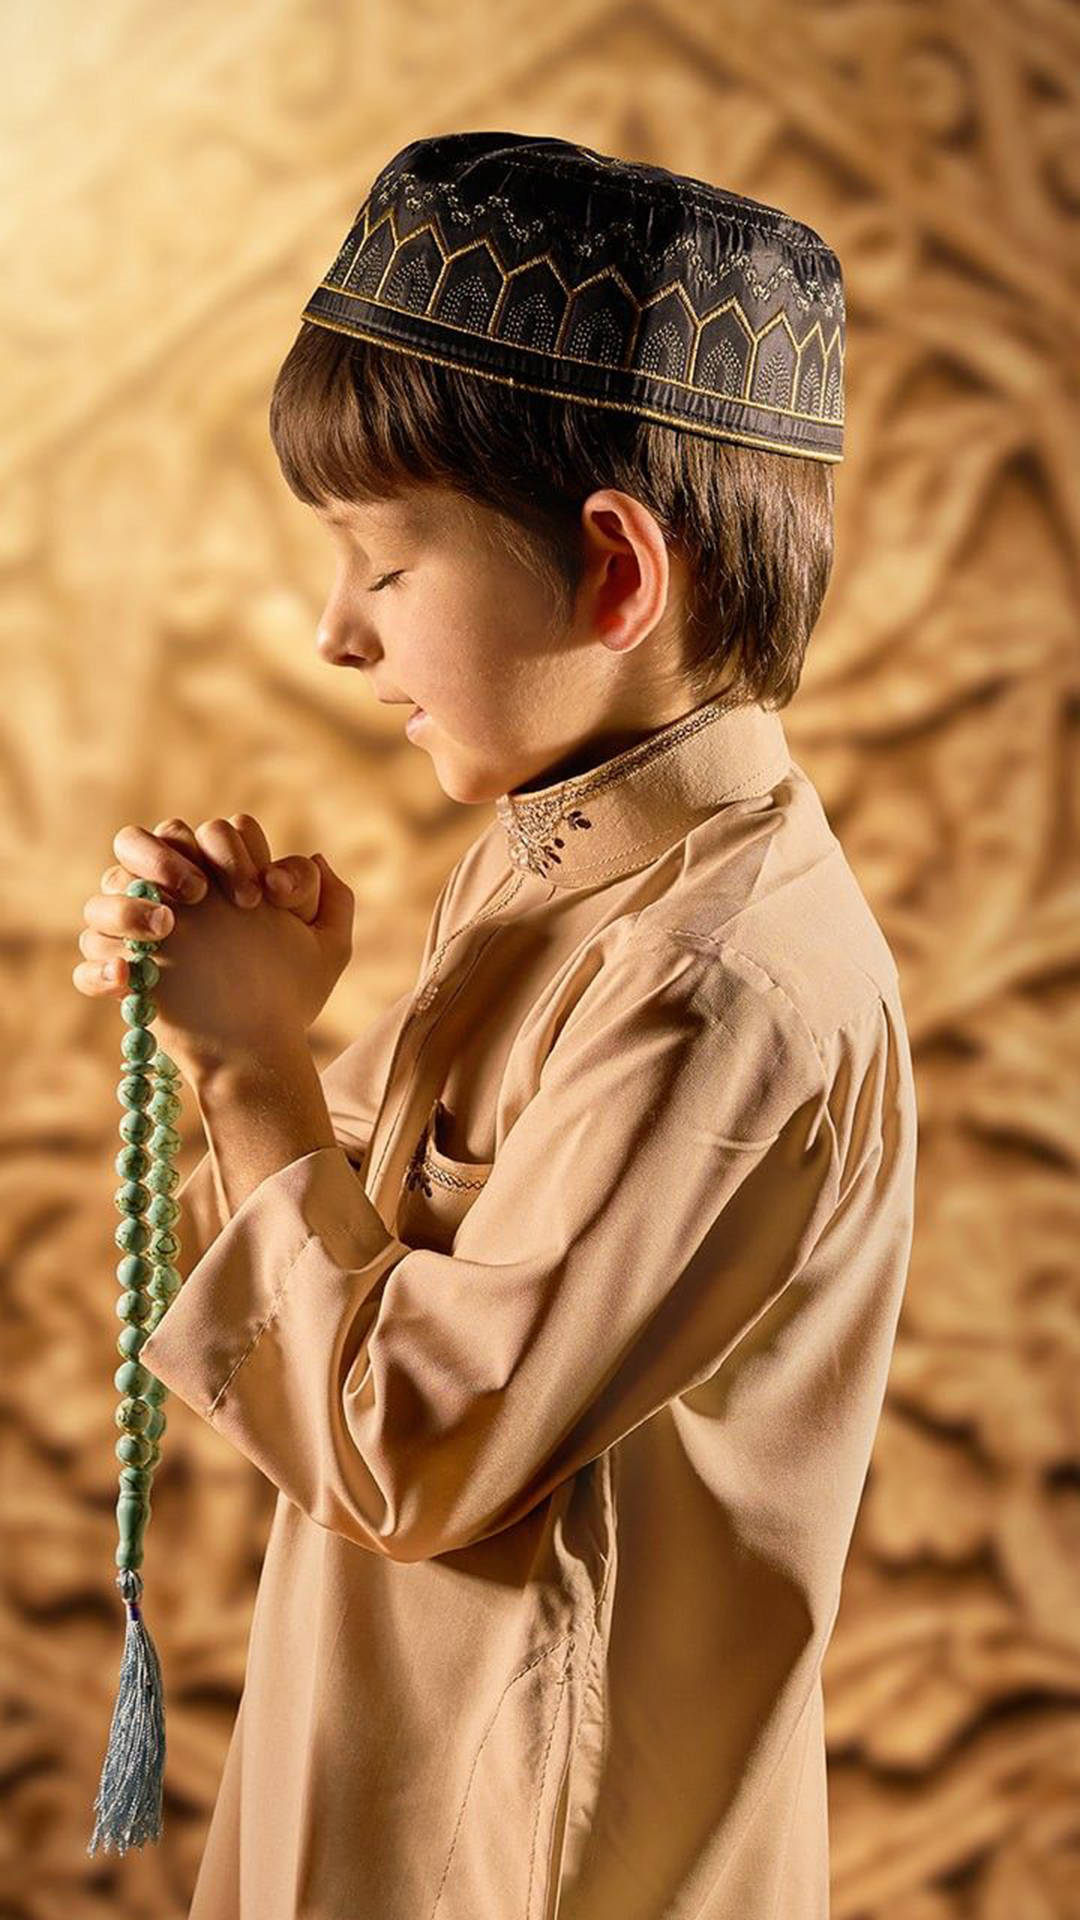 Praying Little Islamic Boy Background